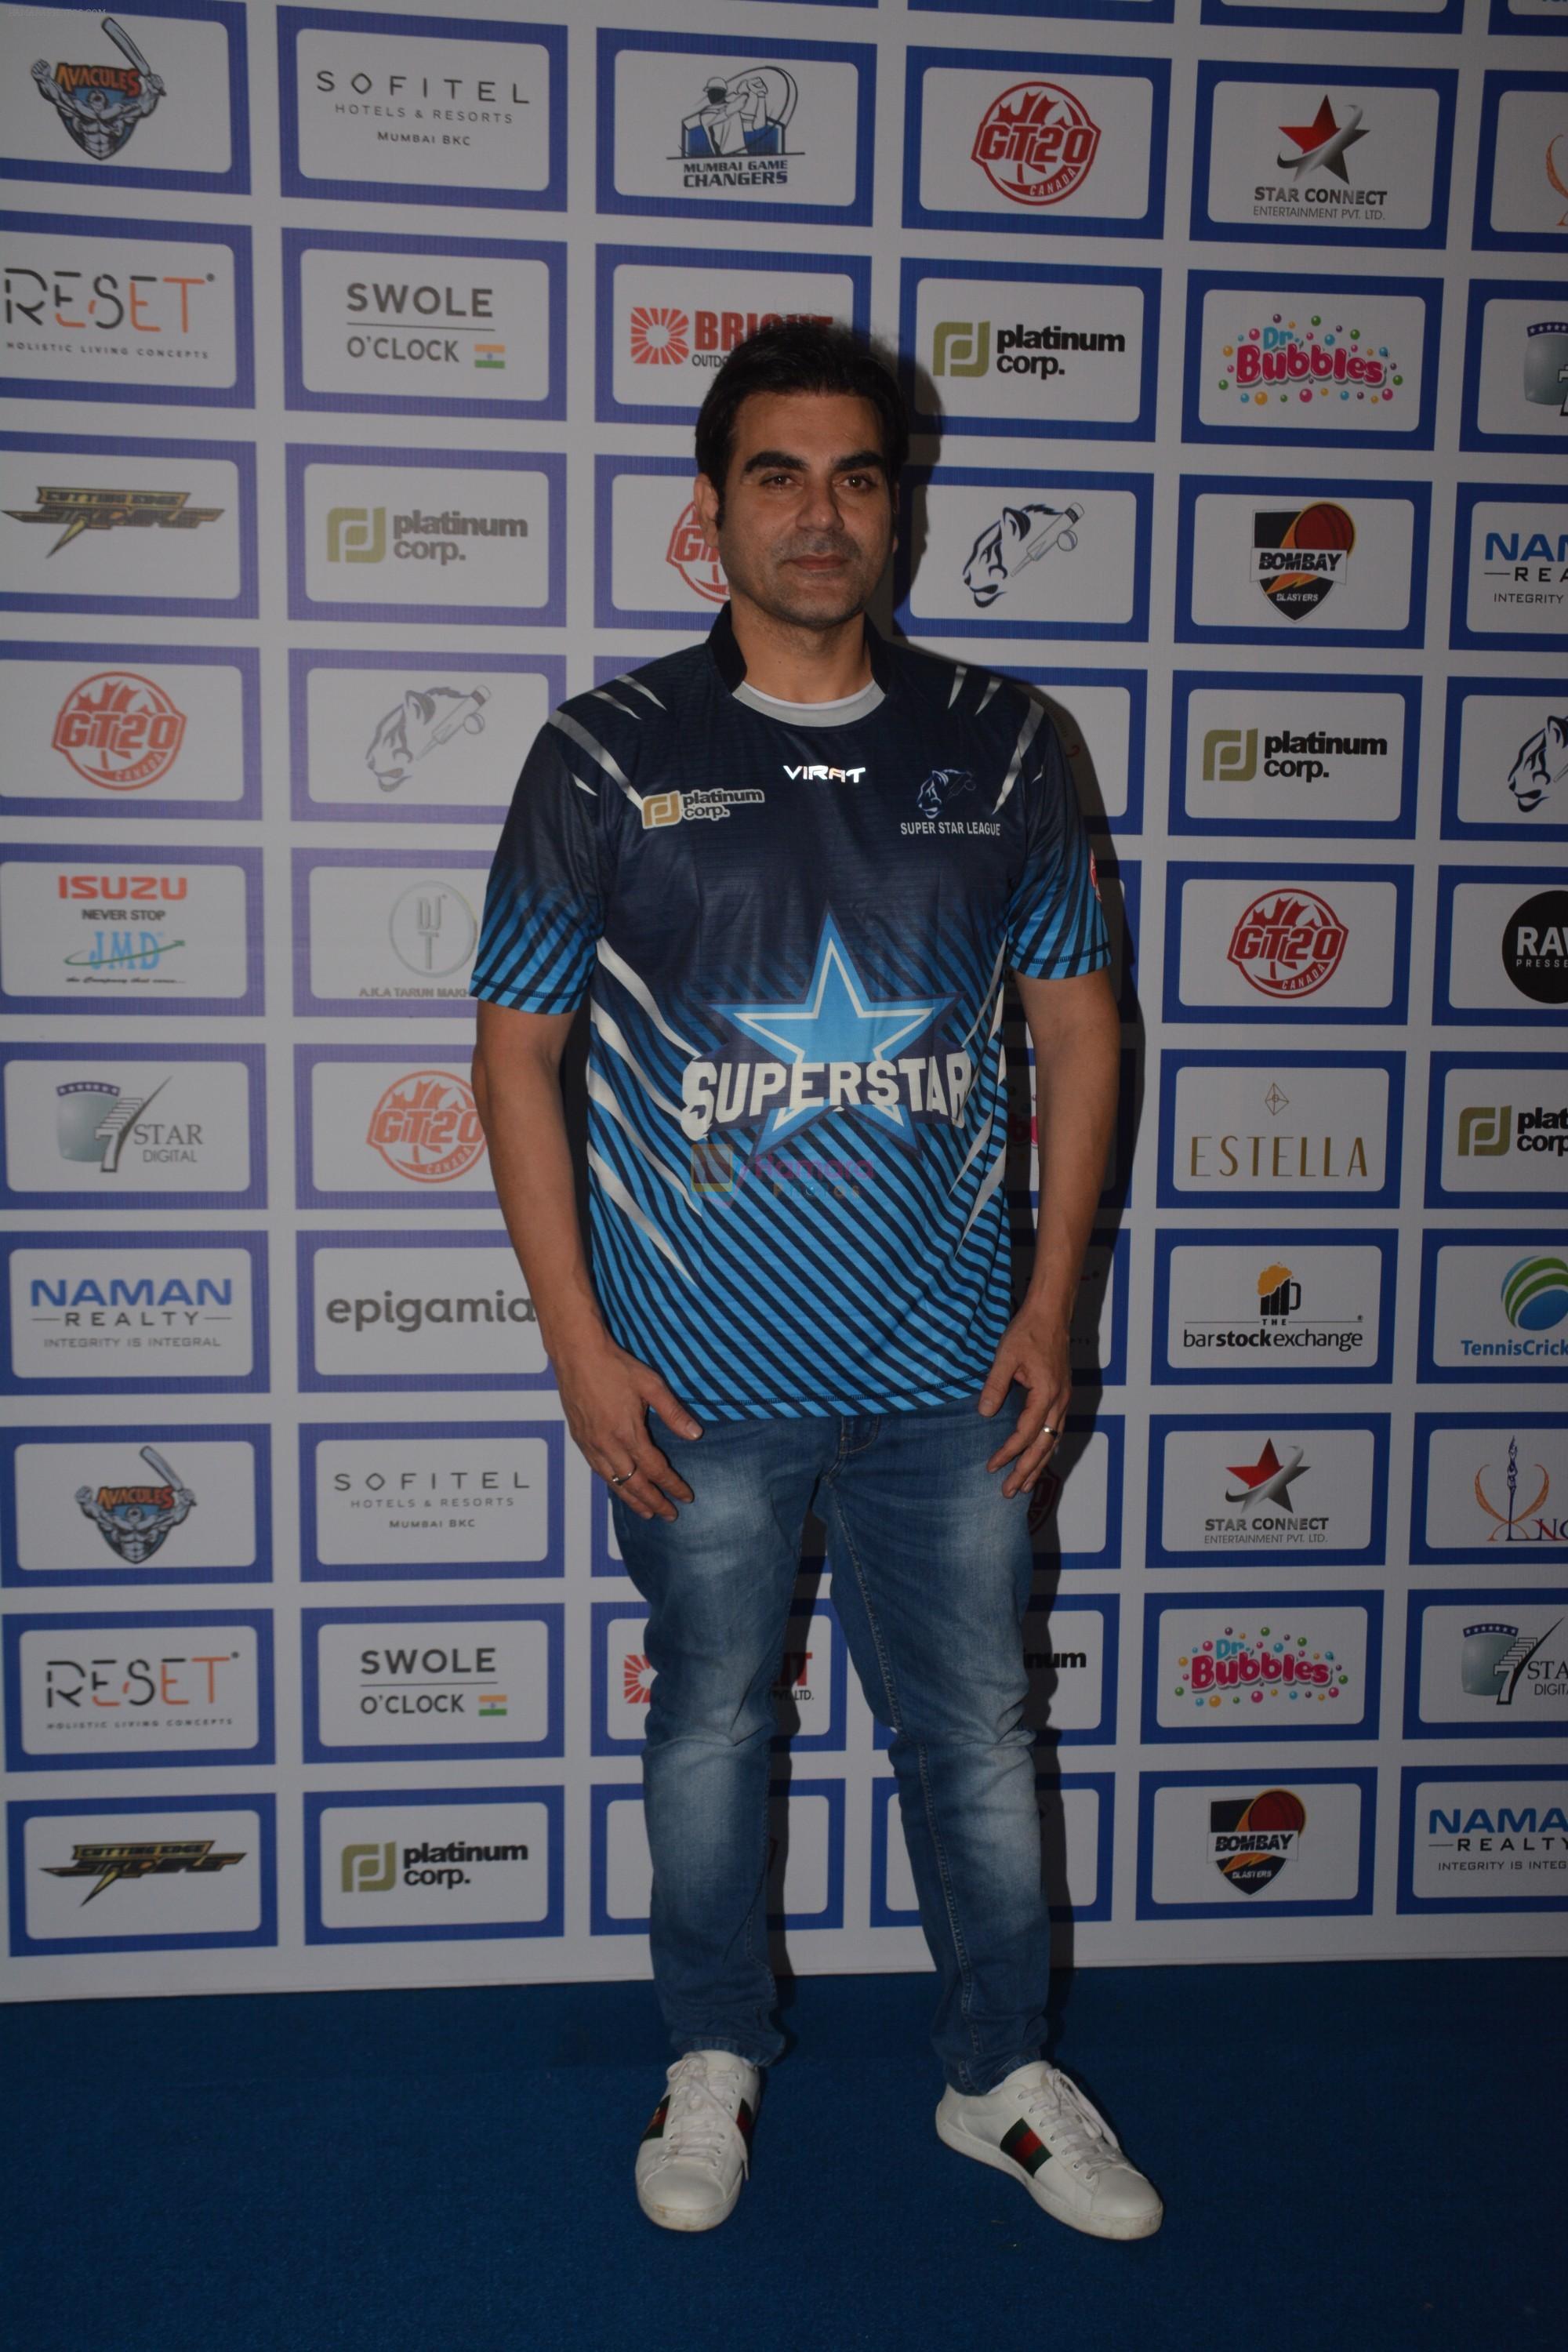 Arbaaz Khan during The Inaugural Match Of Super Star League At Bandra on 7th Jan 2019